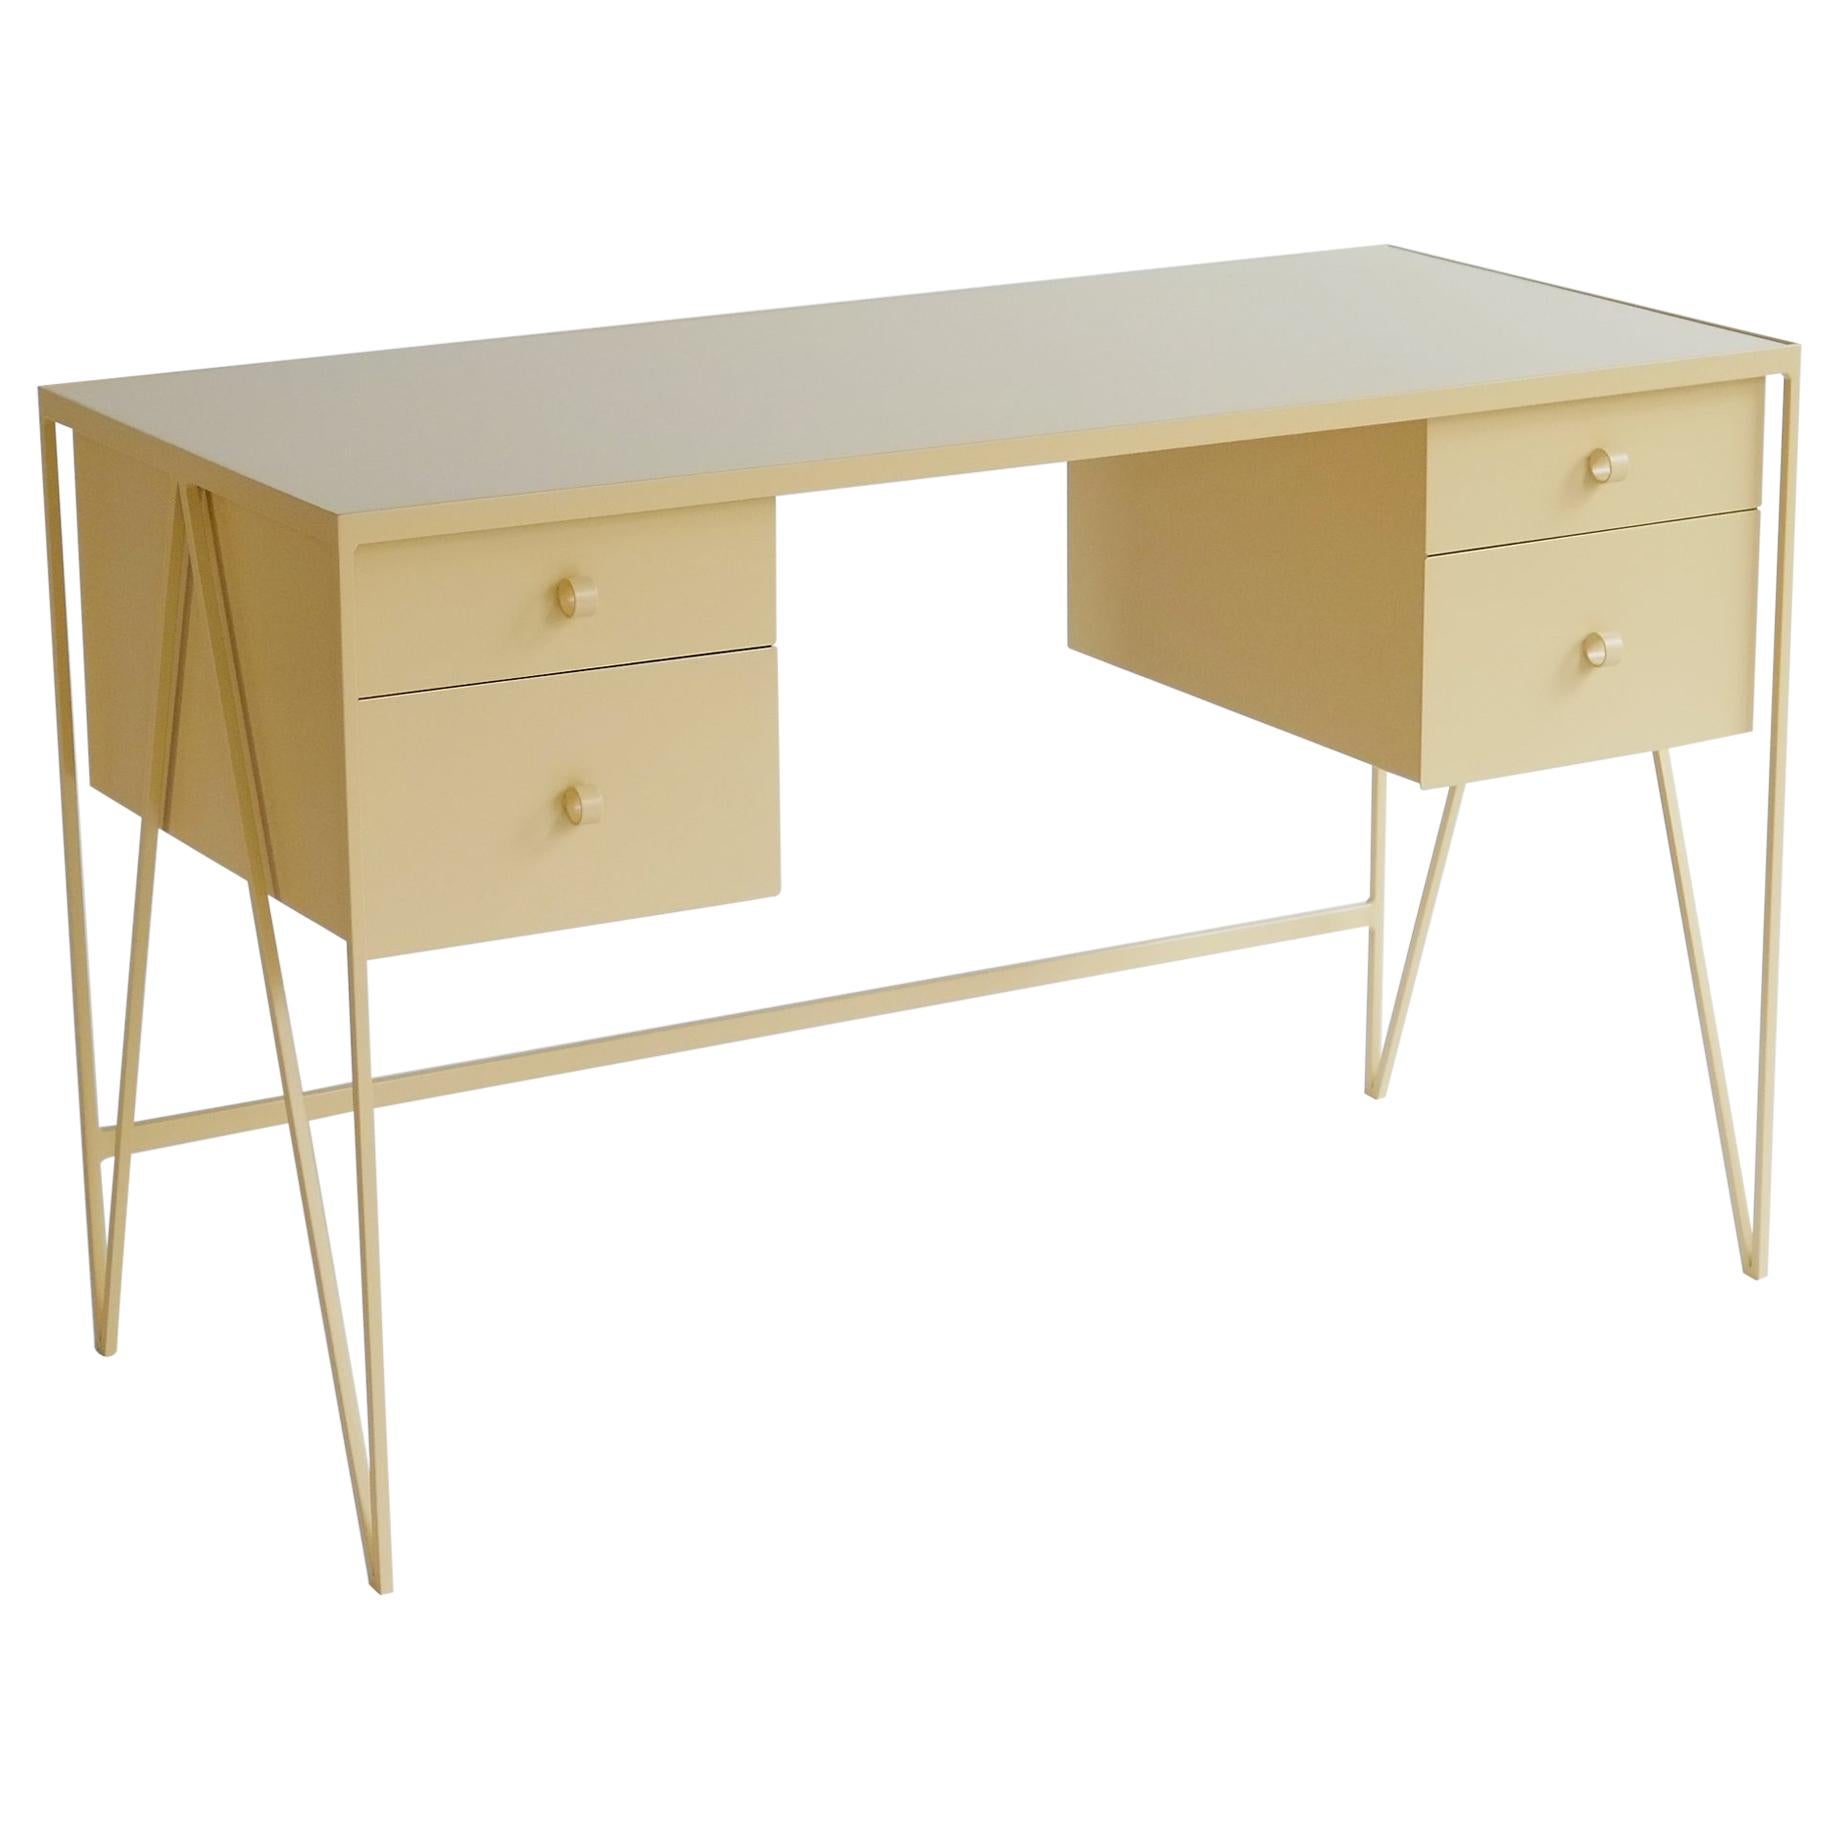 Four Drawer Butternut Study Desk with Linoleum Top, Cream Desk - Customizable